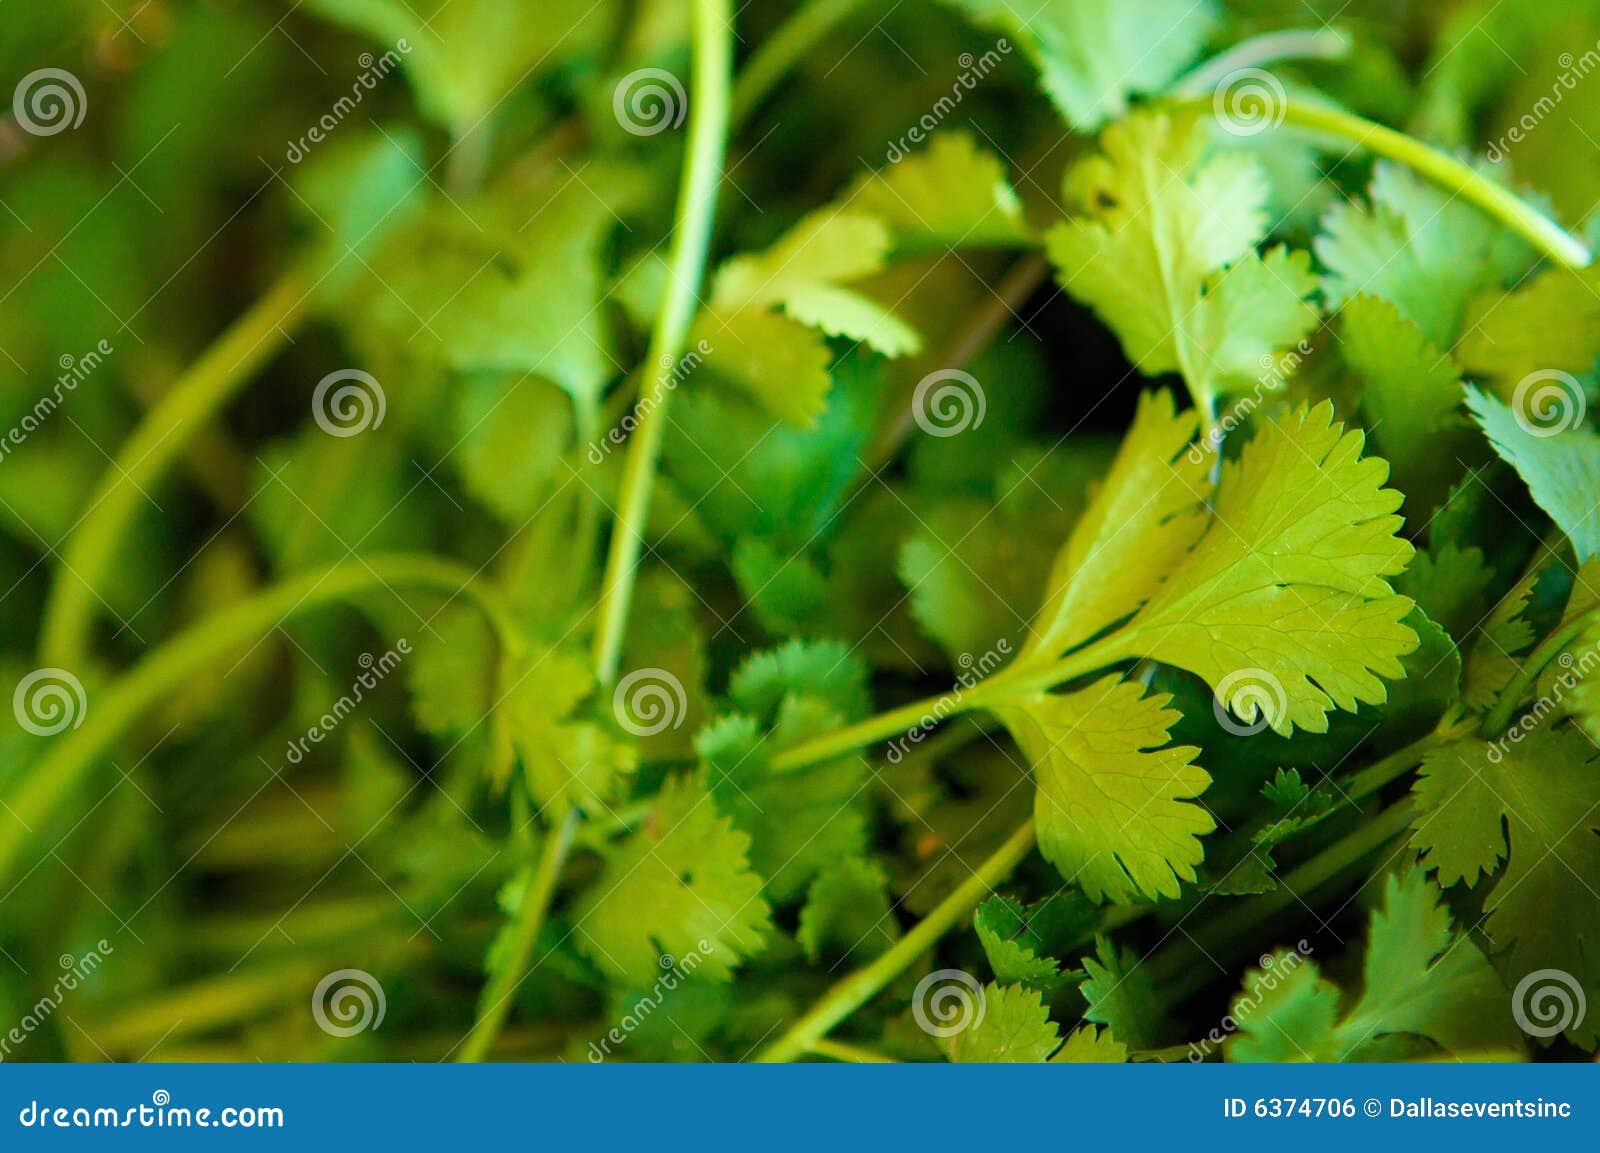 a fresh bunch of cilantro